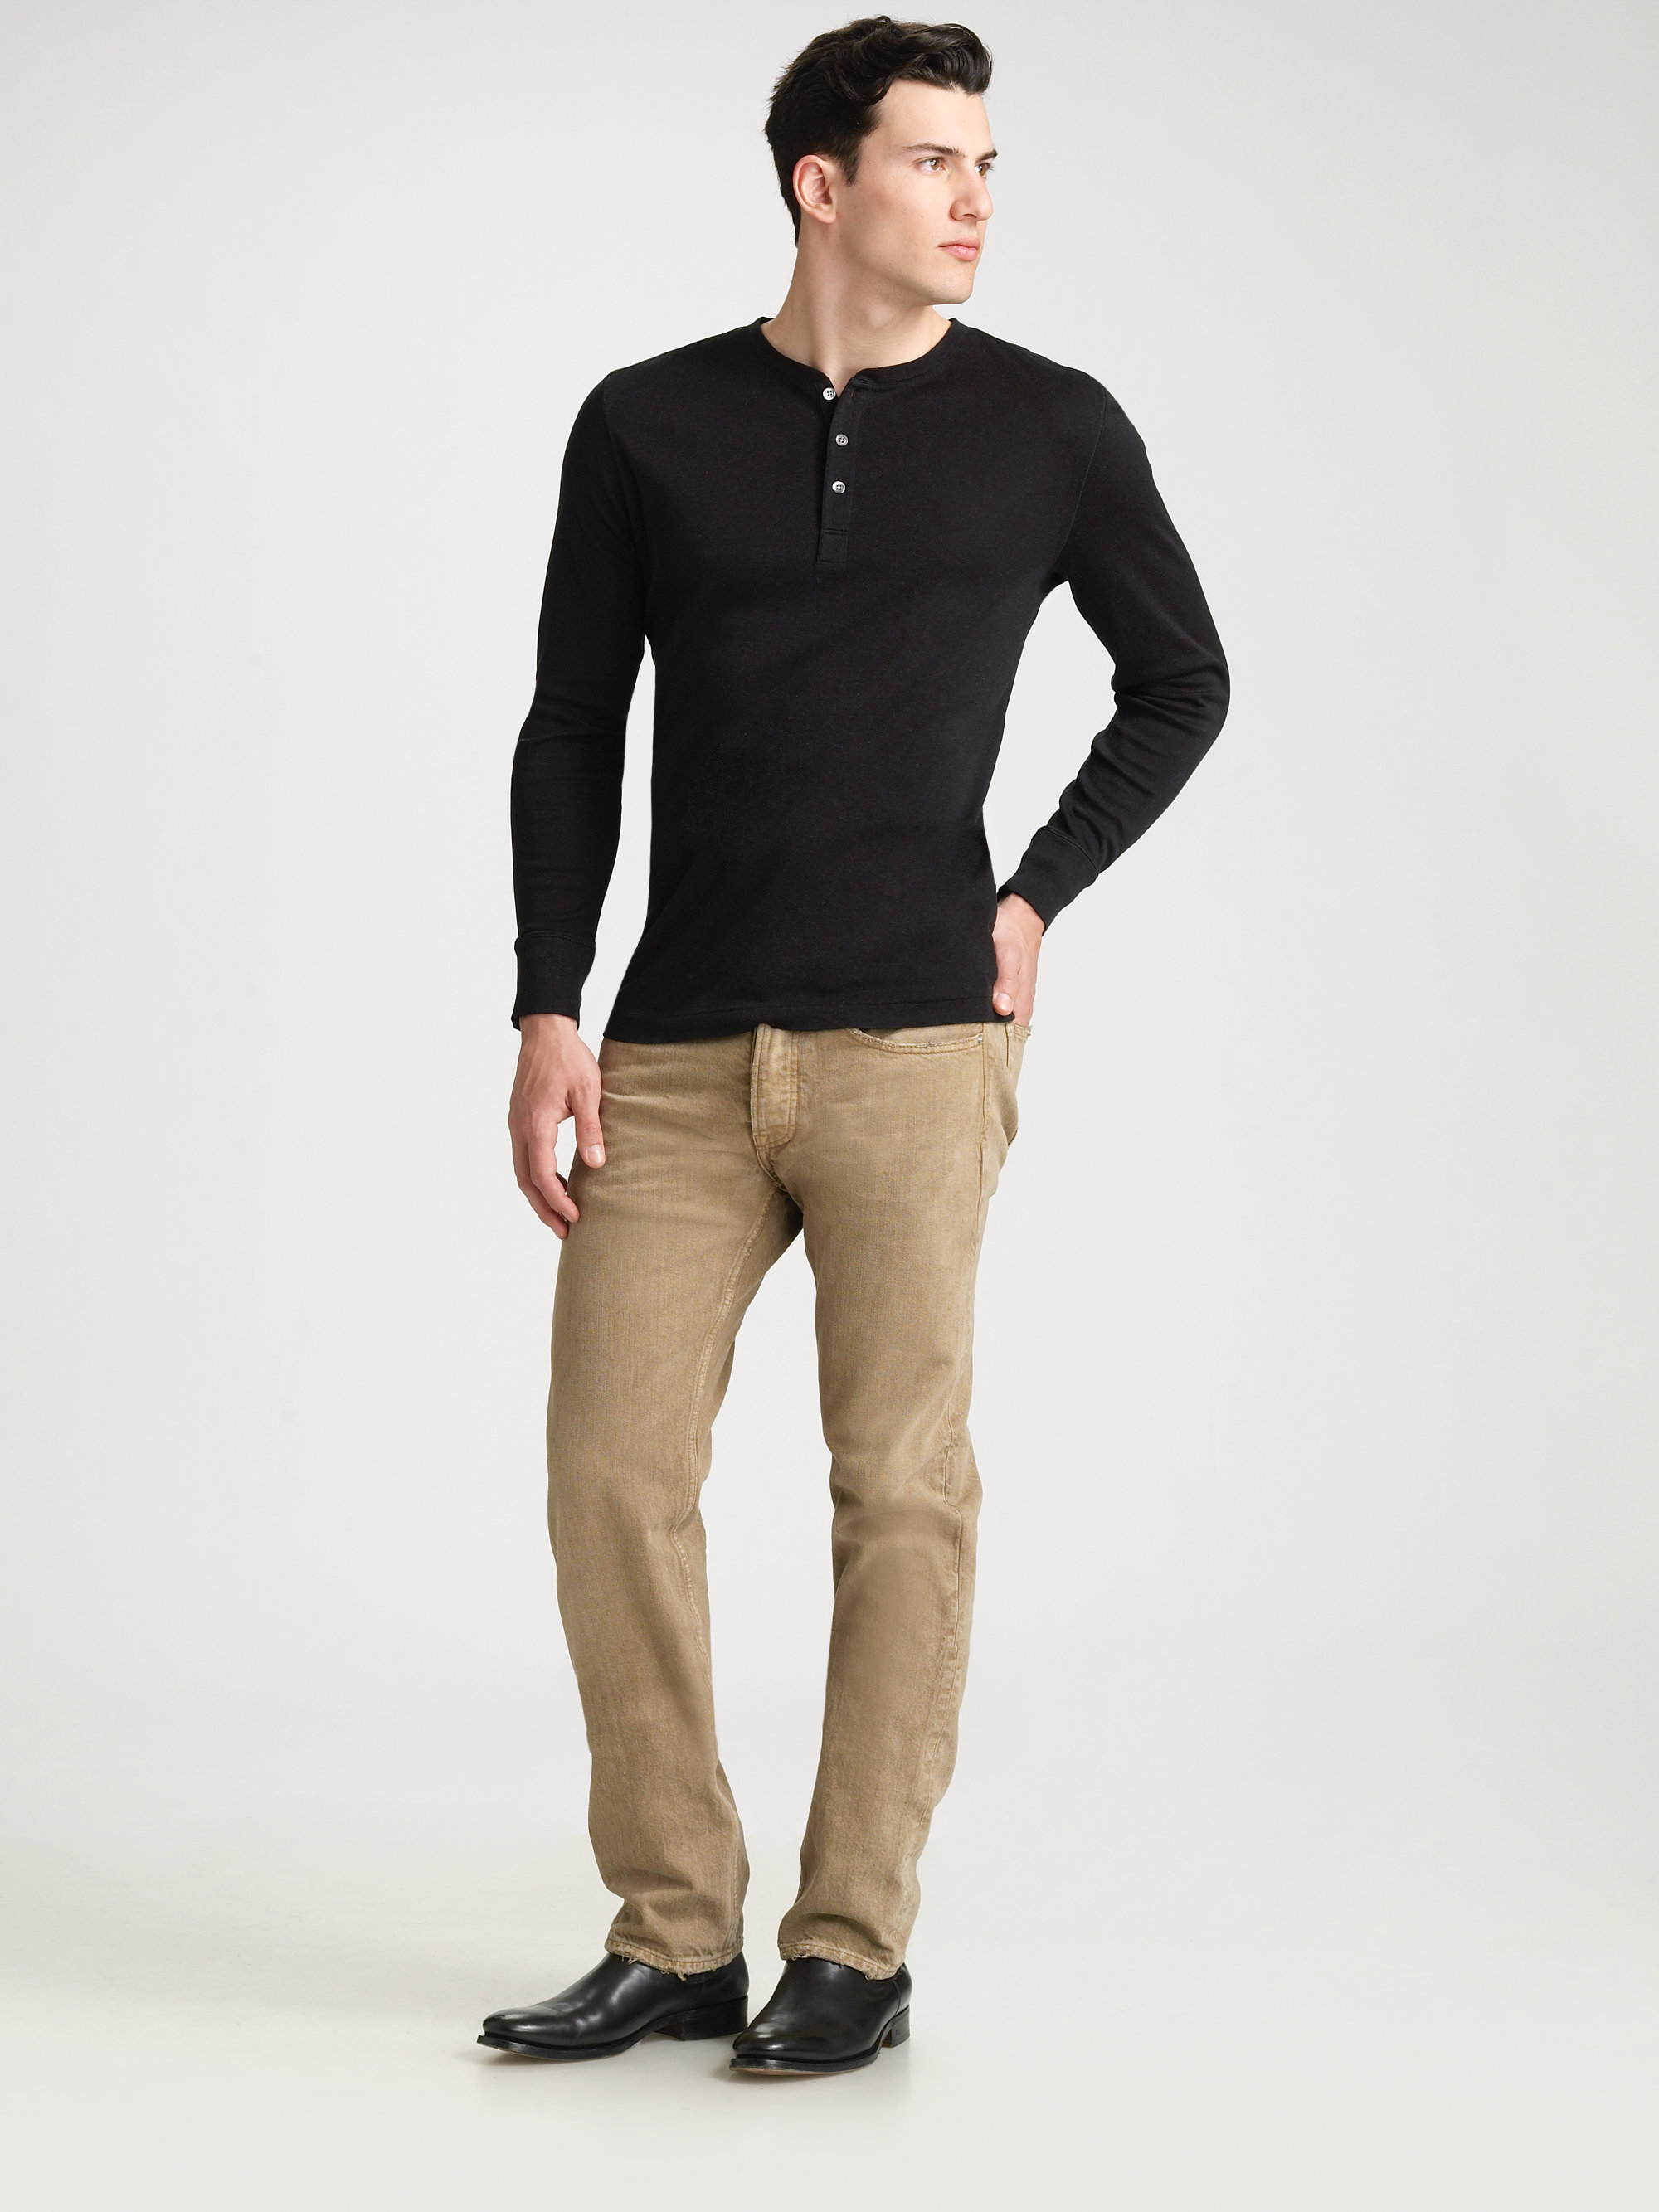 Ralph Lauren Black Label Ribbed Henley Shirt in Black for Men | Lyst